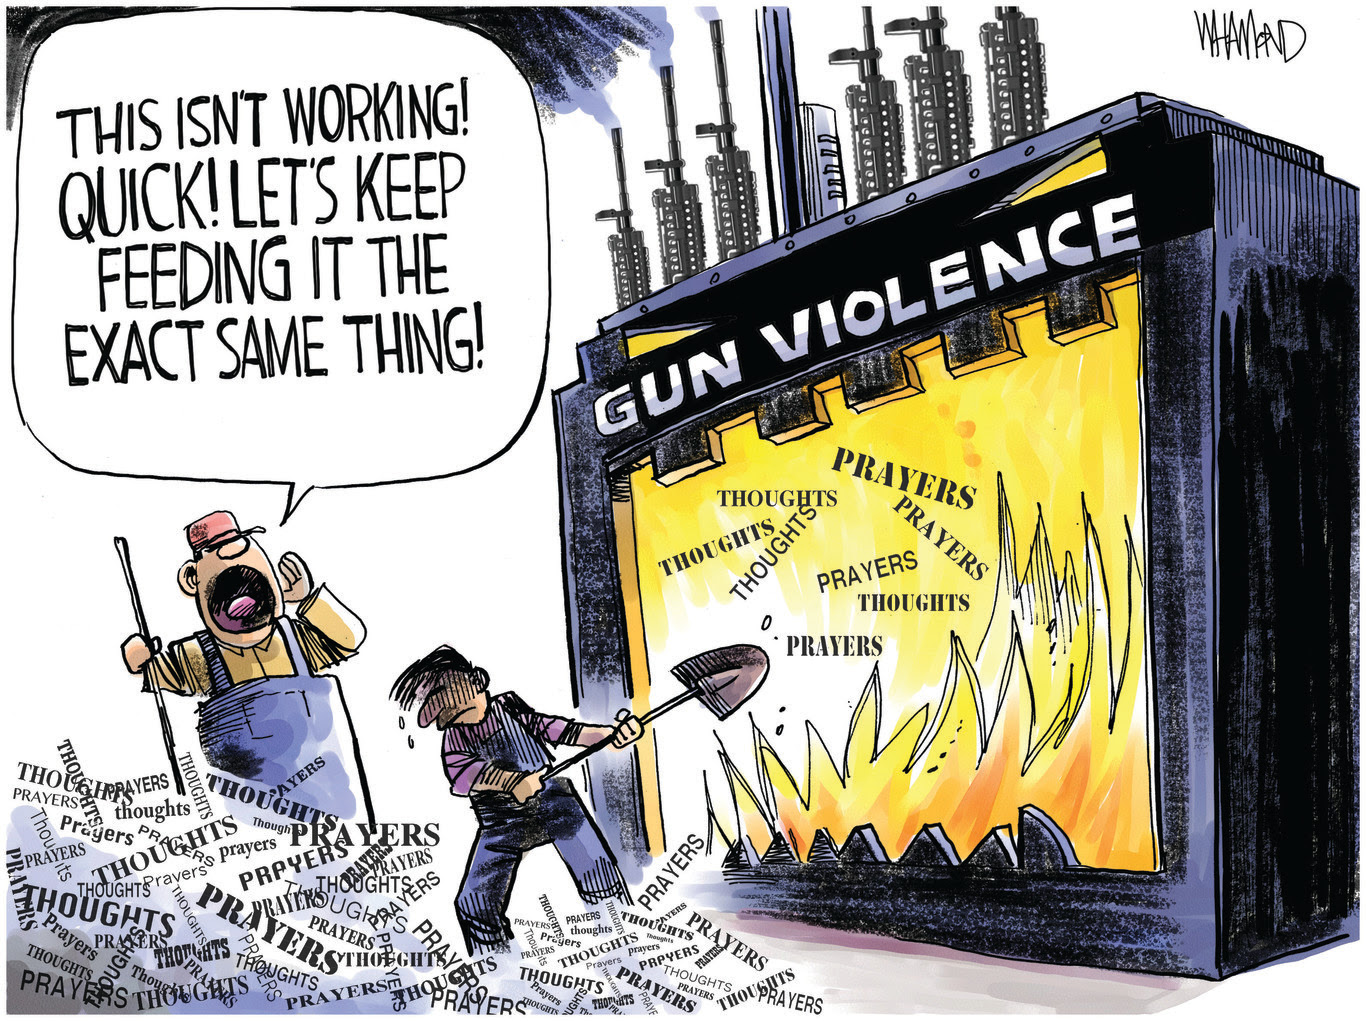 Republicans block gun reform while mass shootings surge